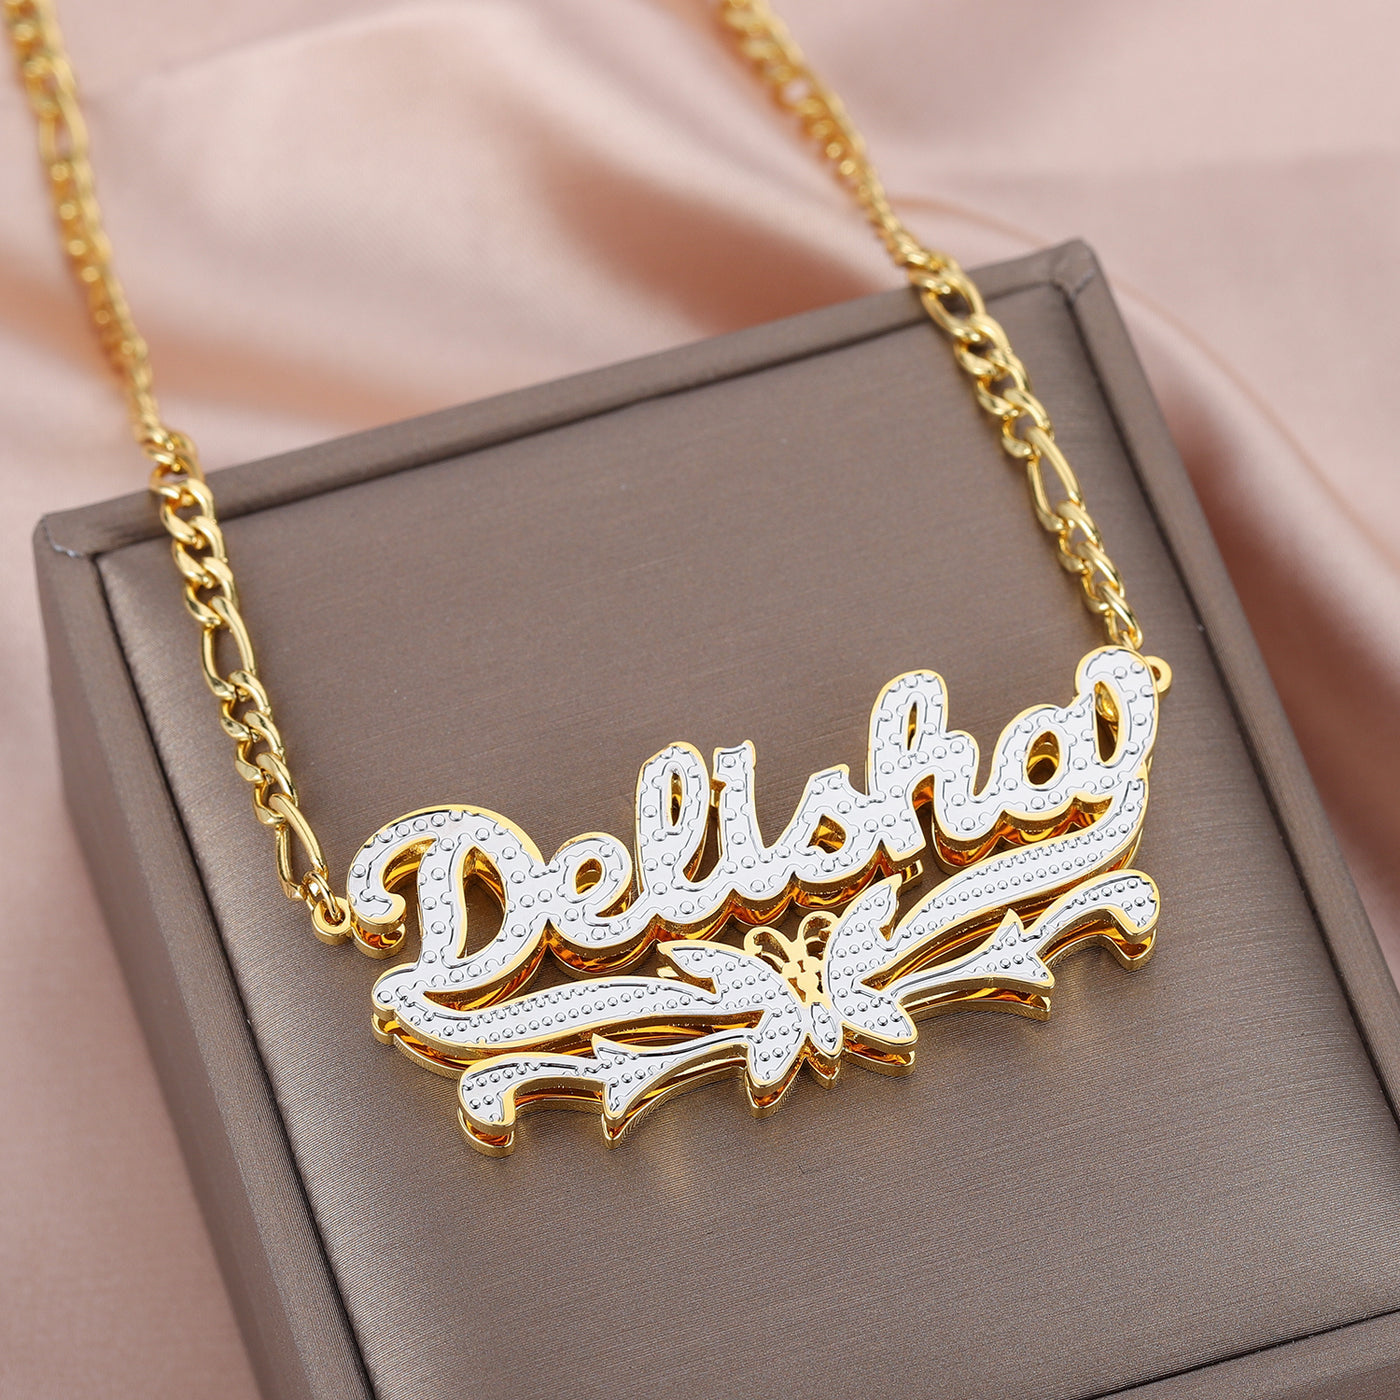 The Delisha Necklace